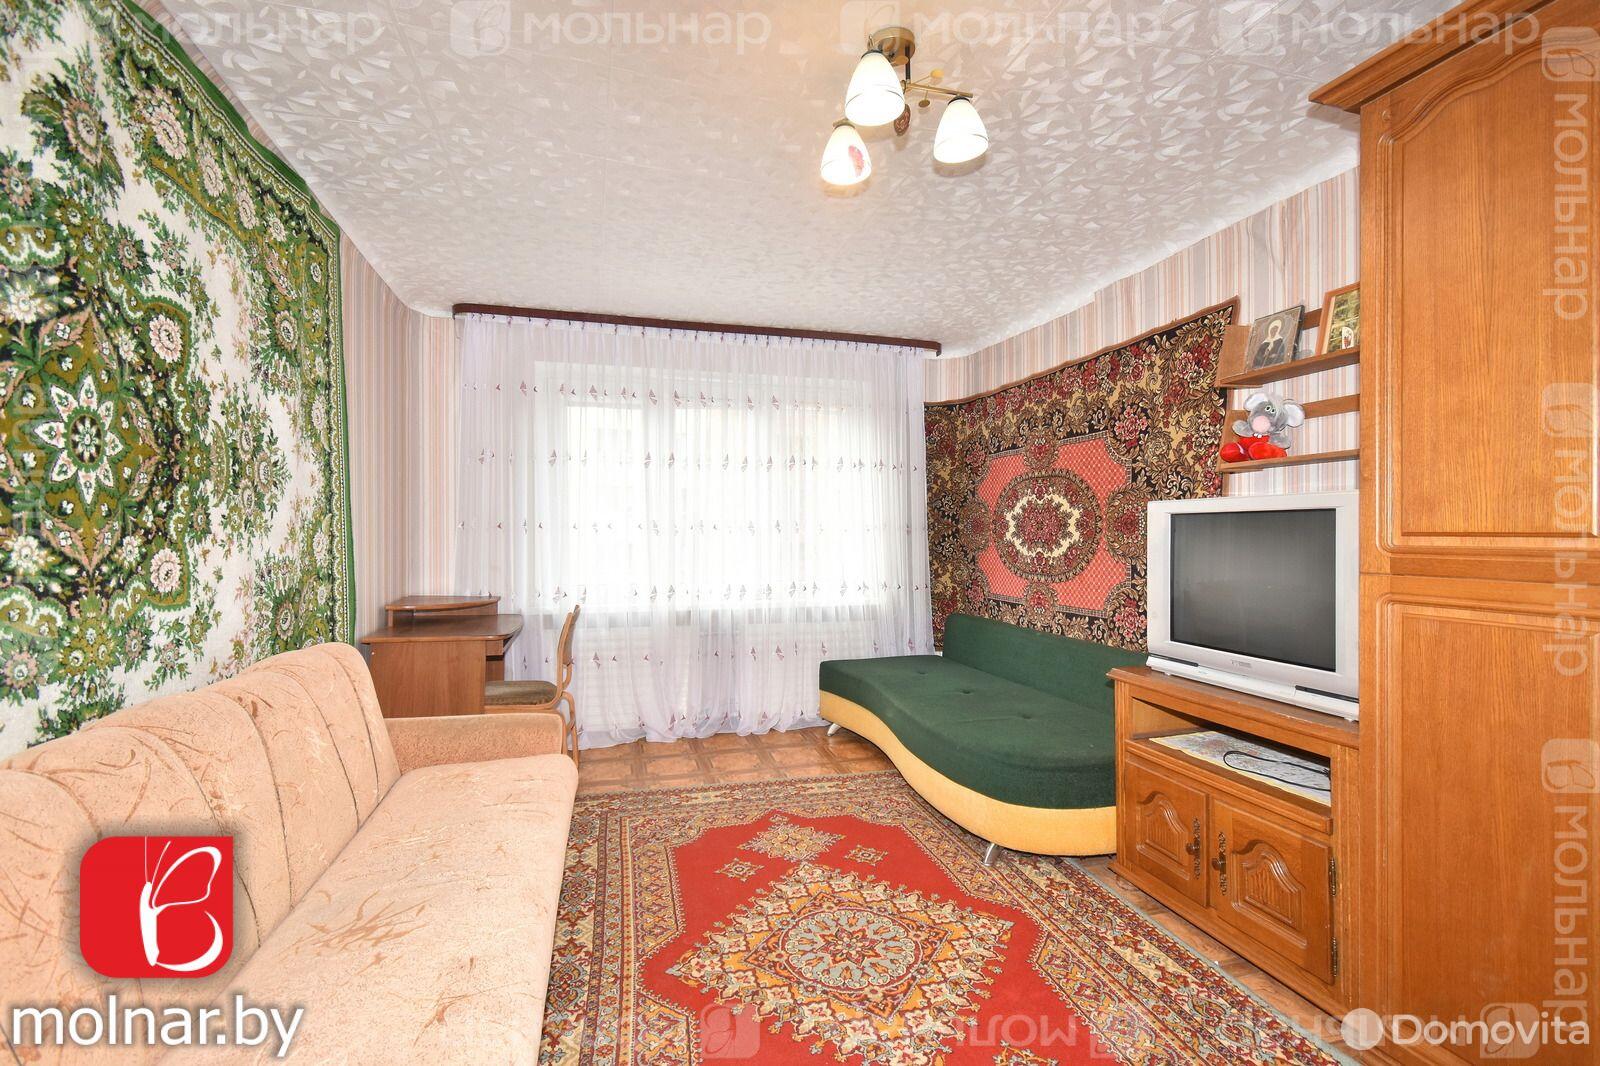 квартира, Минск, ул. Одинцова, д. 53, стоимость продажи 232 575 р.